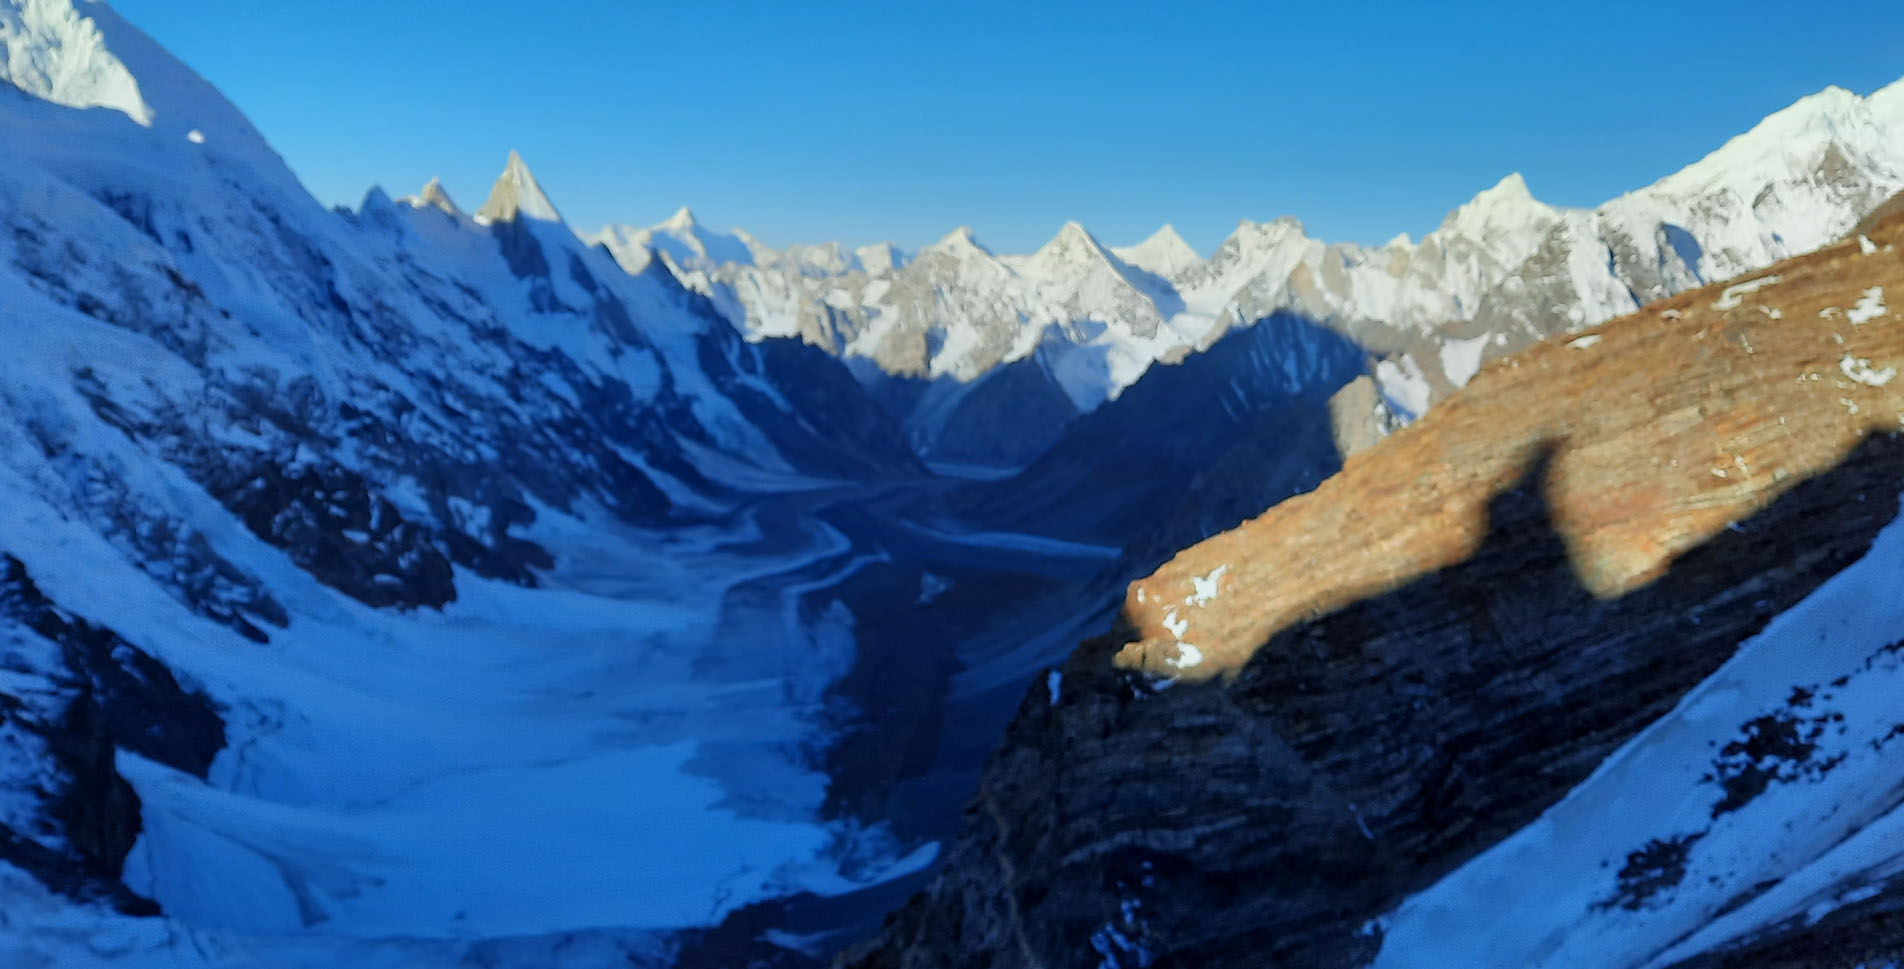 K2 Expedition Pakistan
